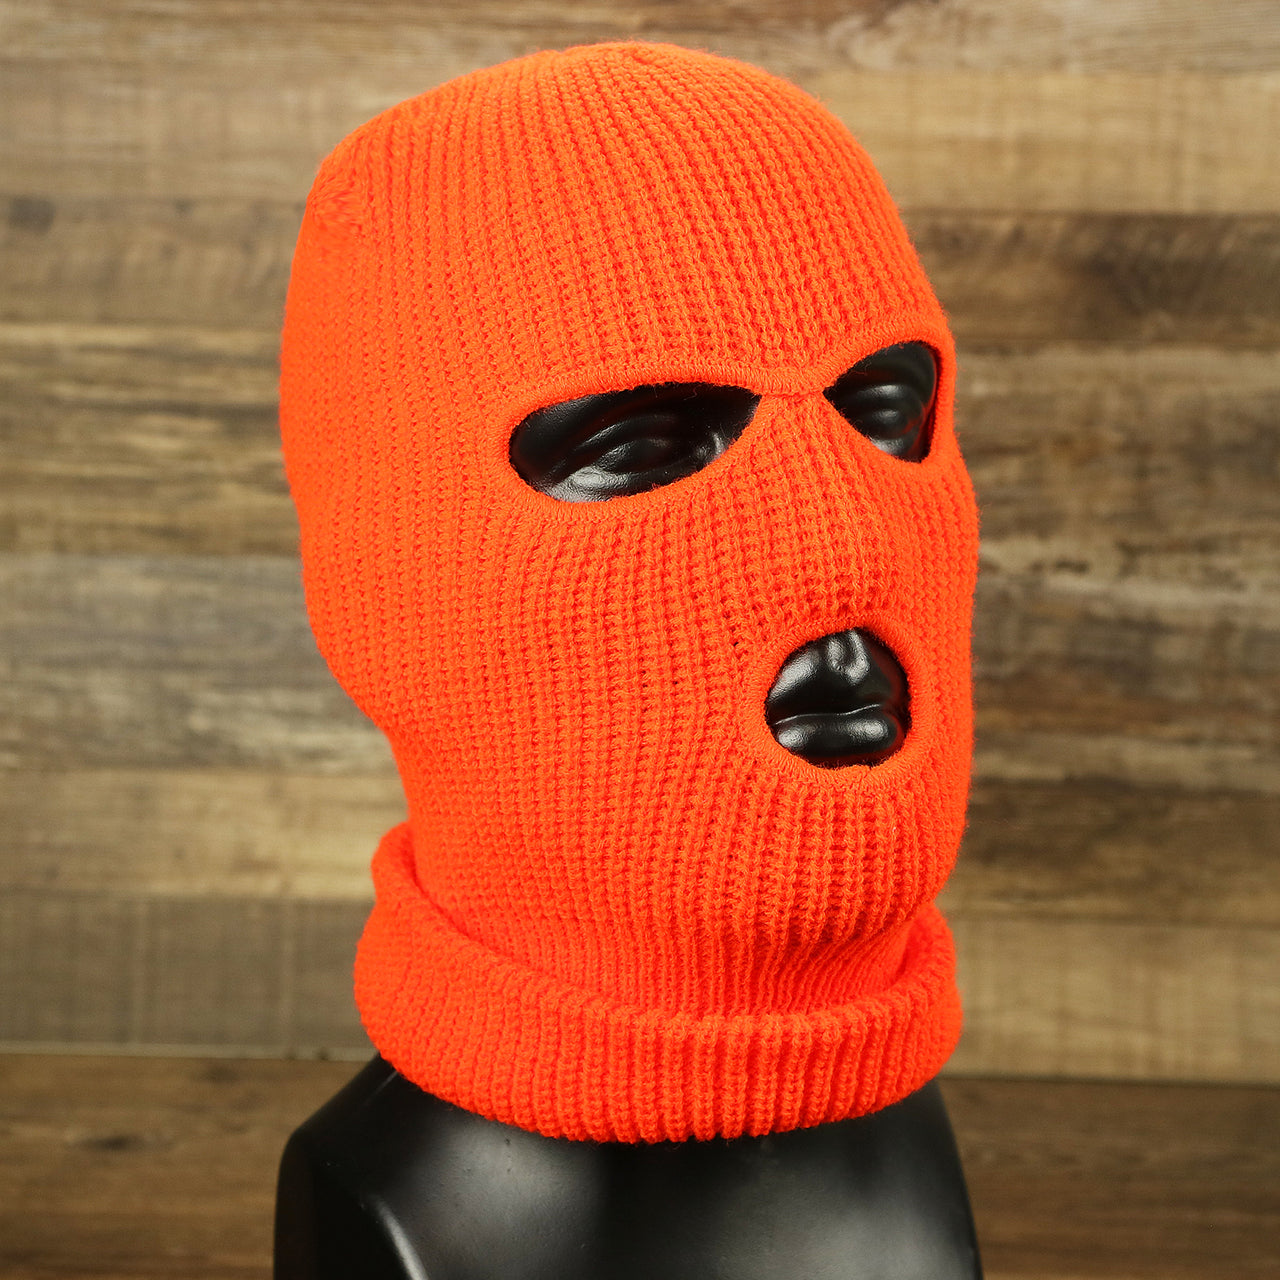 The Safety Orange Snug Fit Three Hole Balaclava | Neon Orange Knit Ski Mask from the side